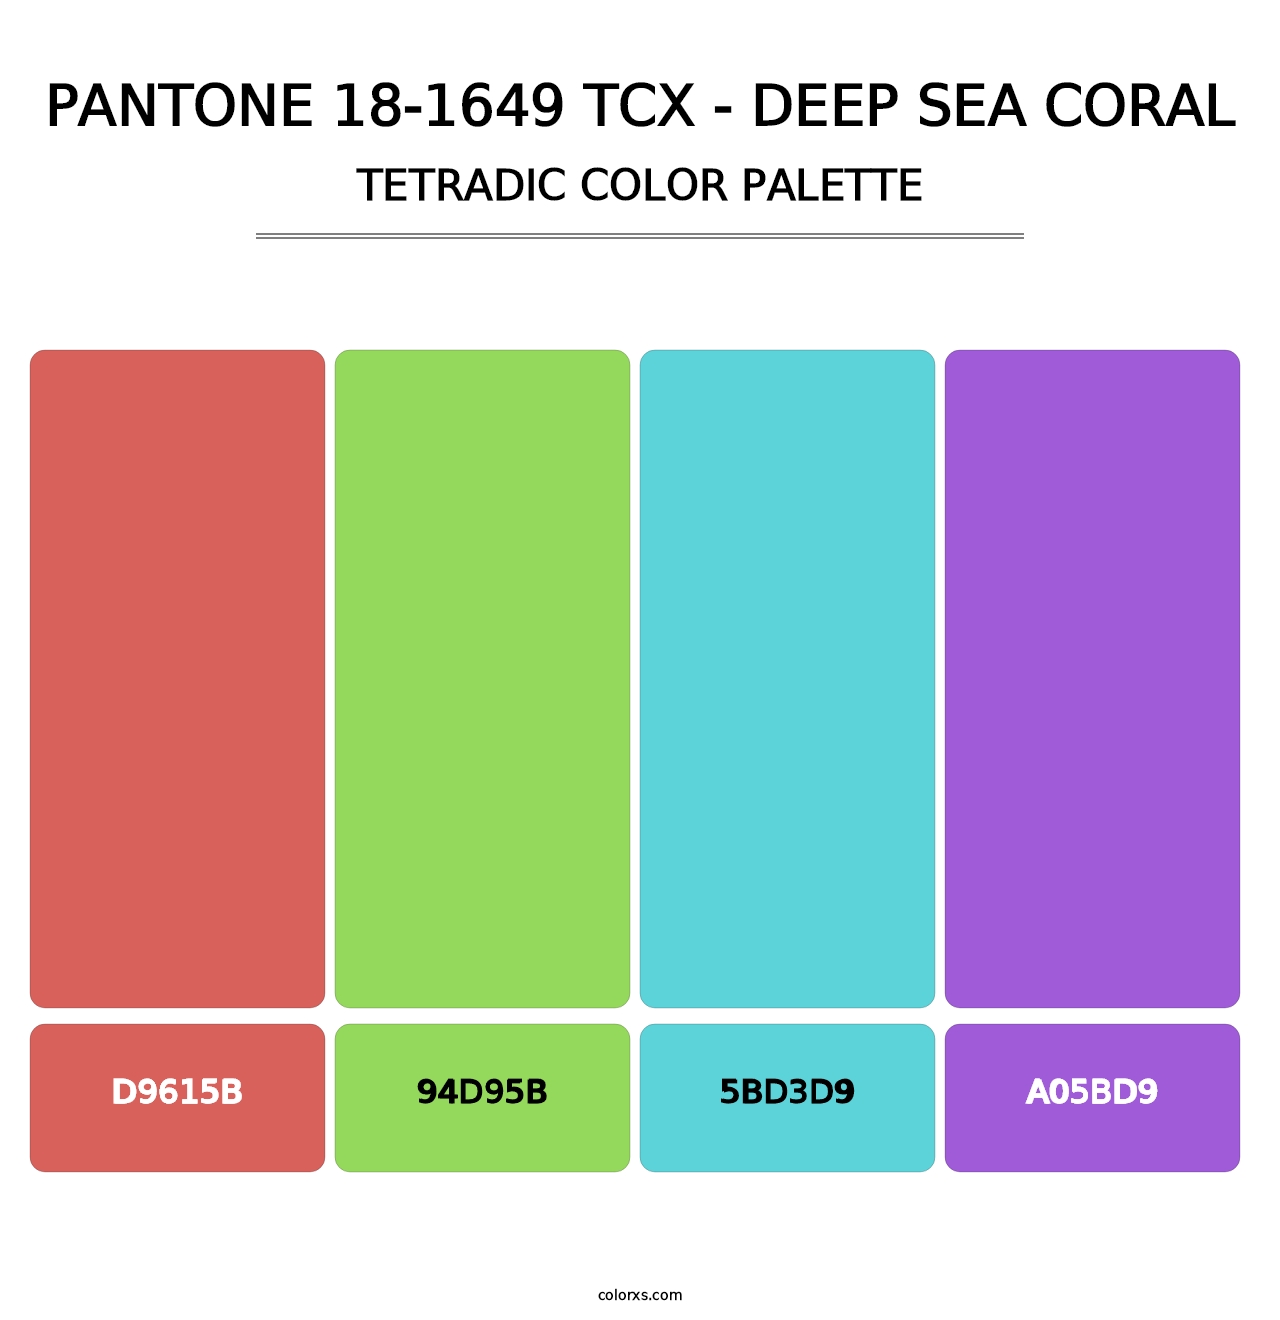 PANTONE 18-1649 TCX - Deep Sea Coral - Tetradic Color Palette